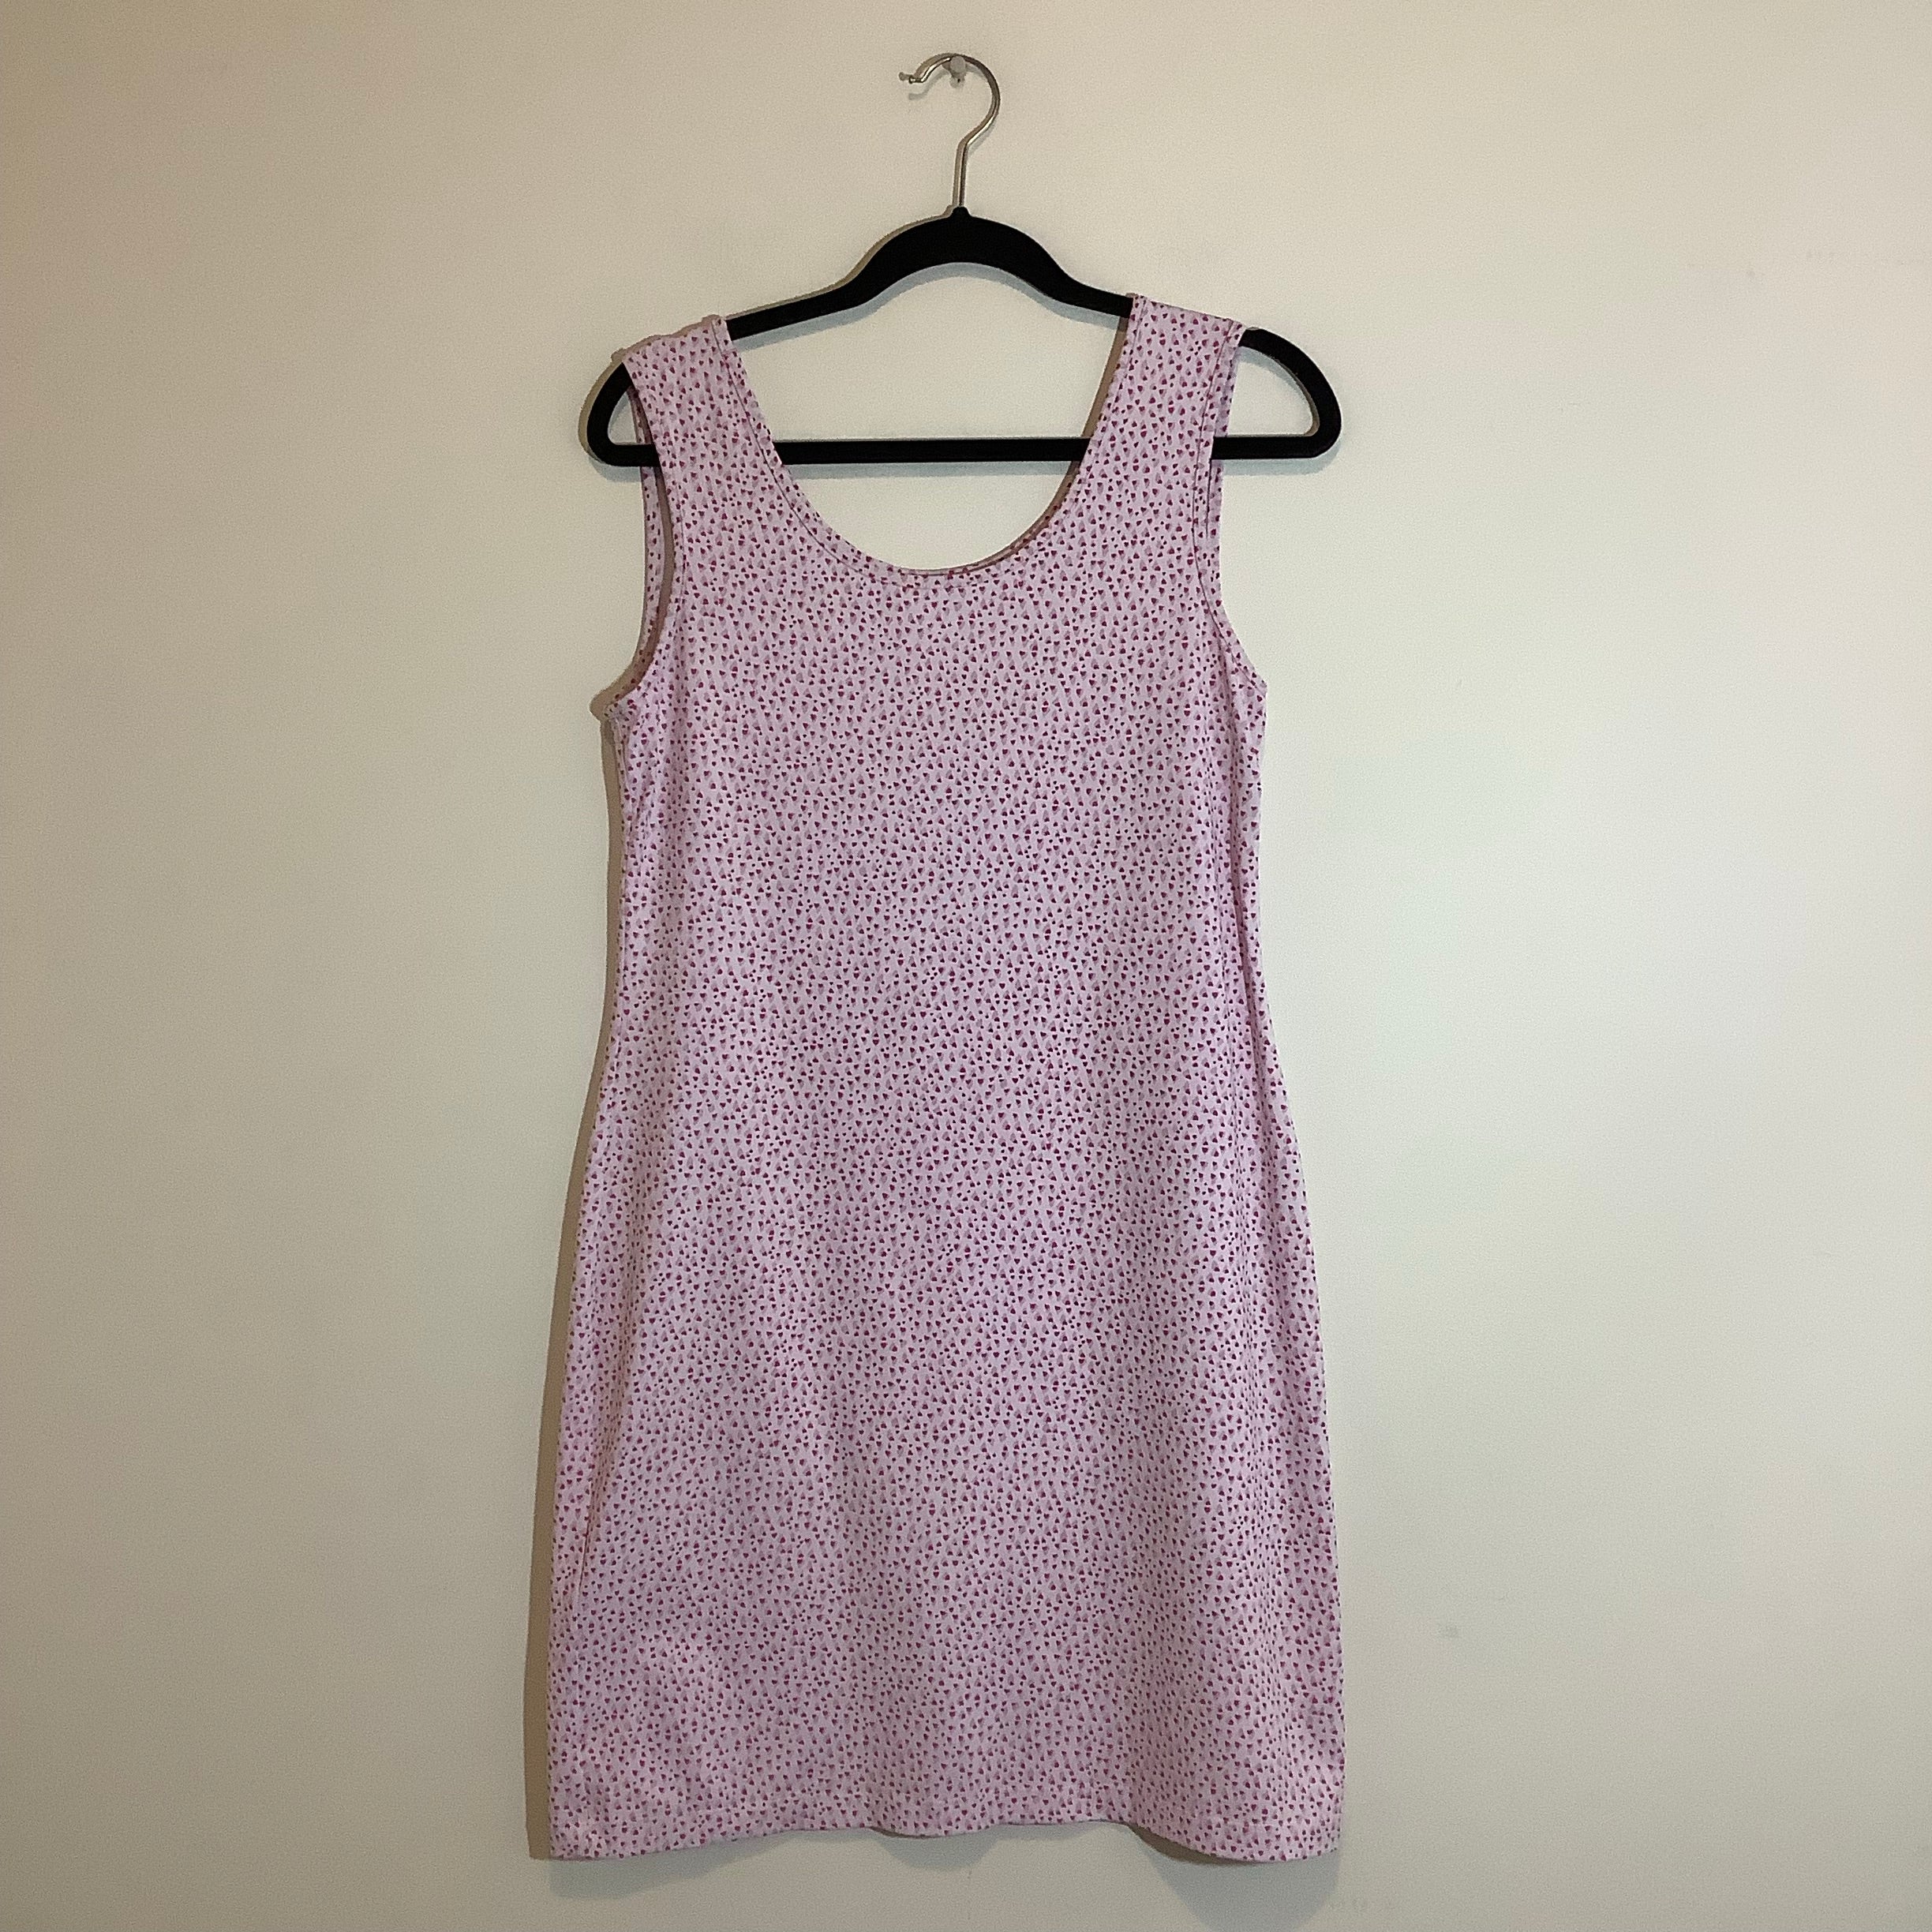 Presifor Pink Dress Size Medium